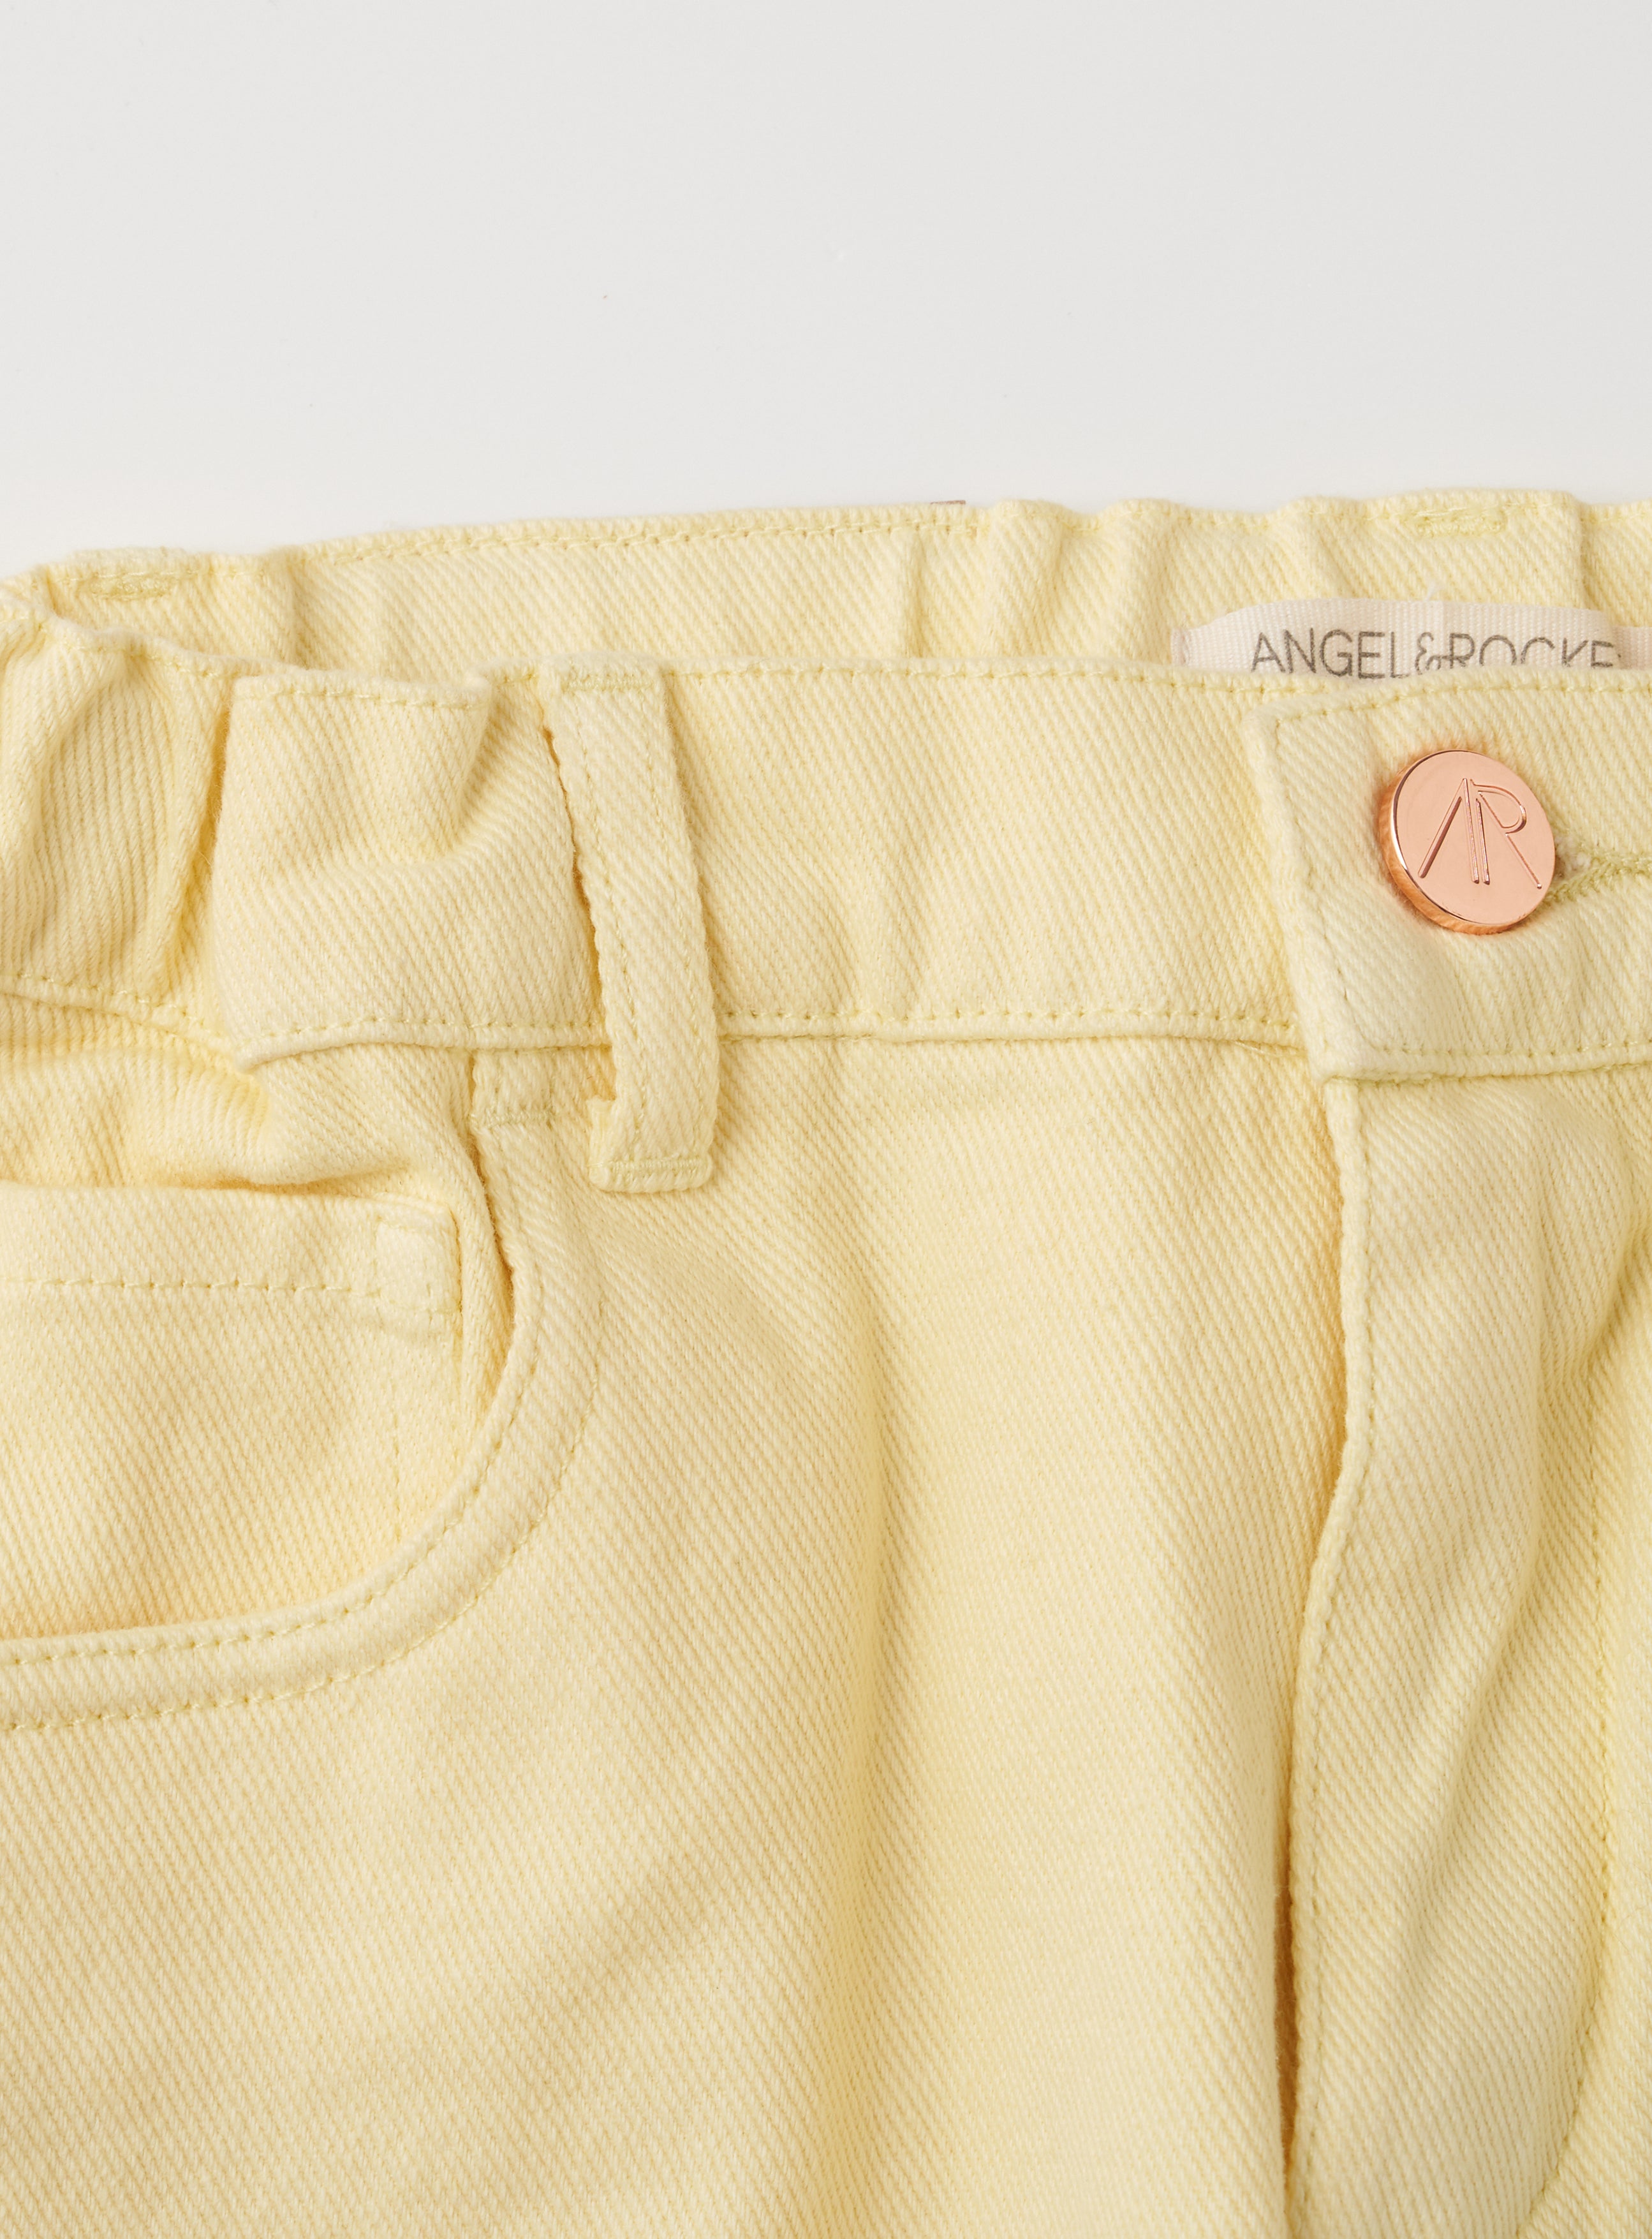 Girls Solid Yellow Smart Denim Pants